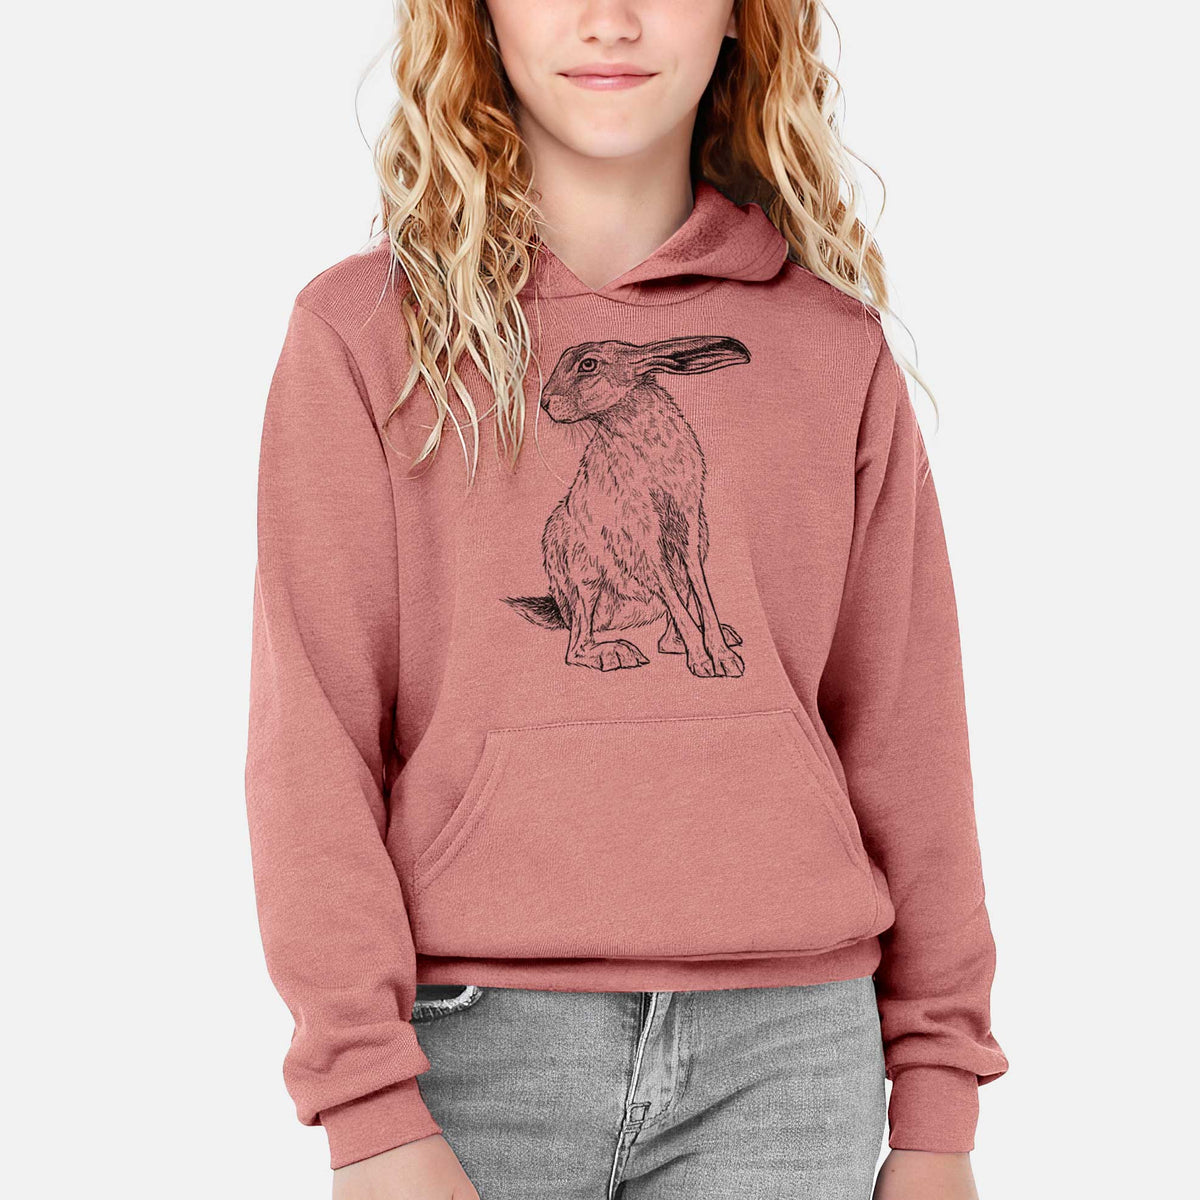 Black-tailed Jackrabbit - Lepus californicus - Youth Hoodie Sweatshirt